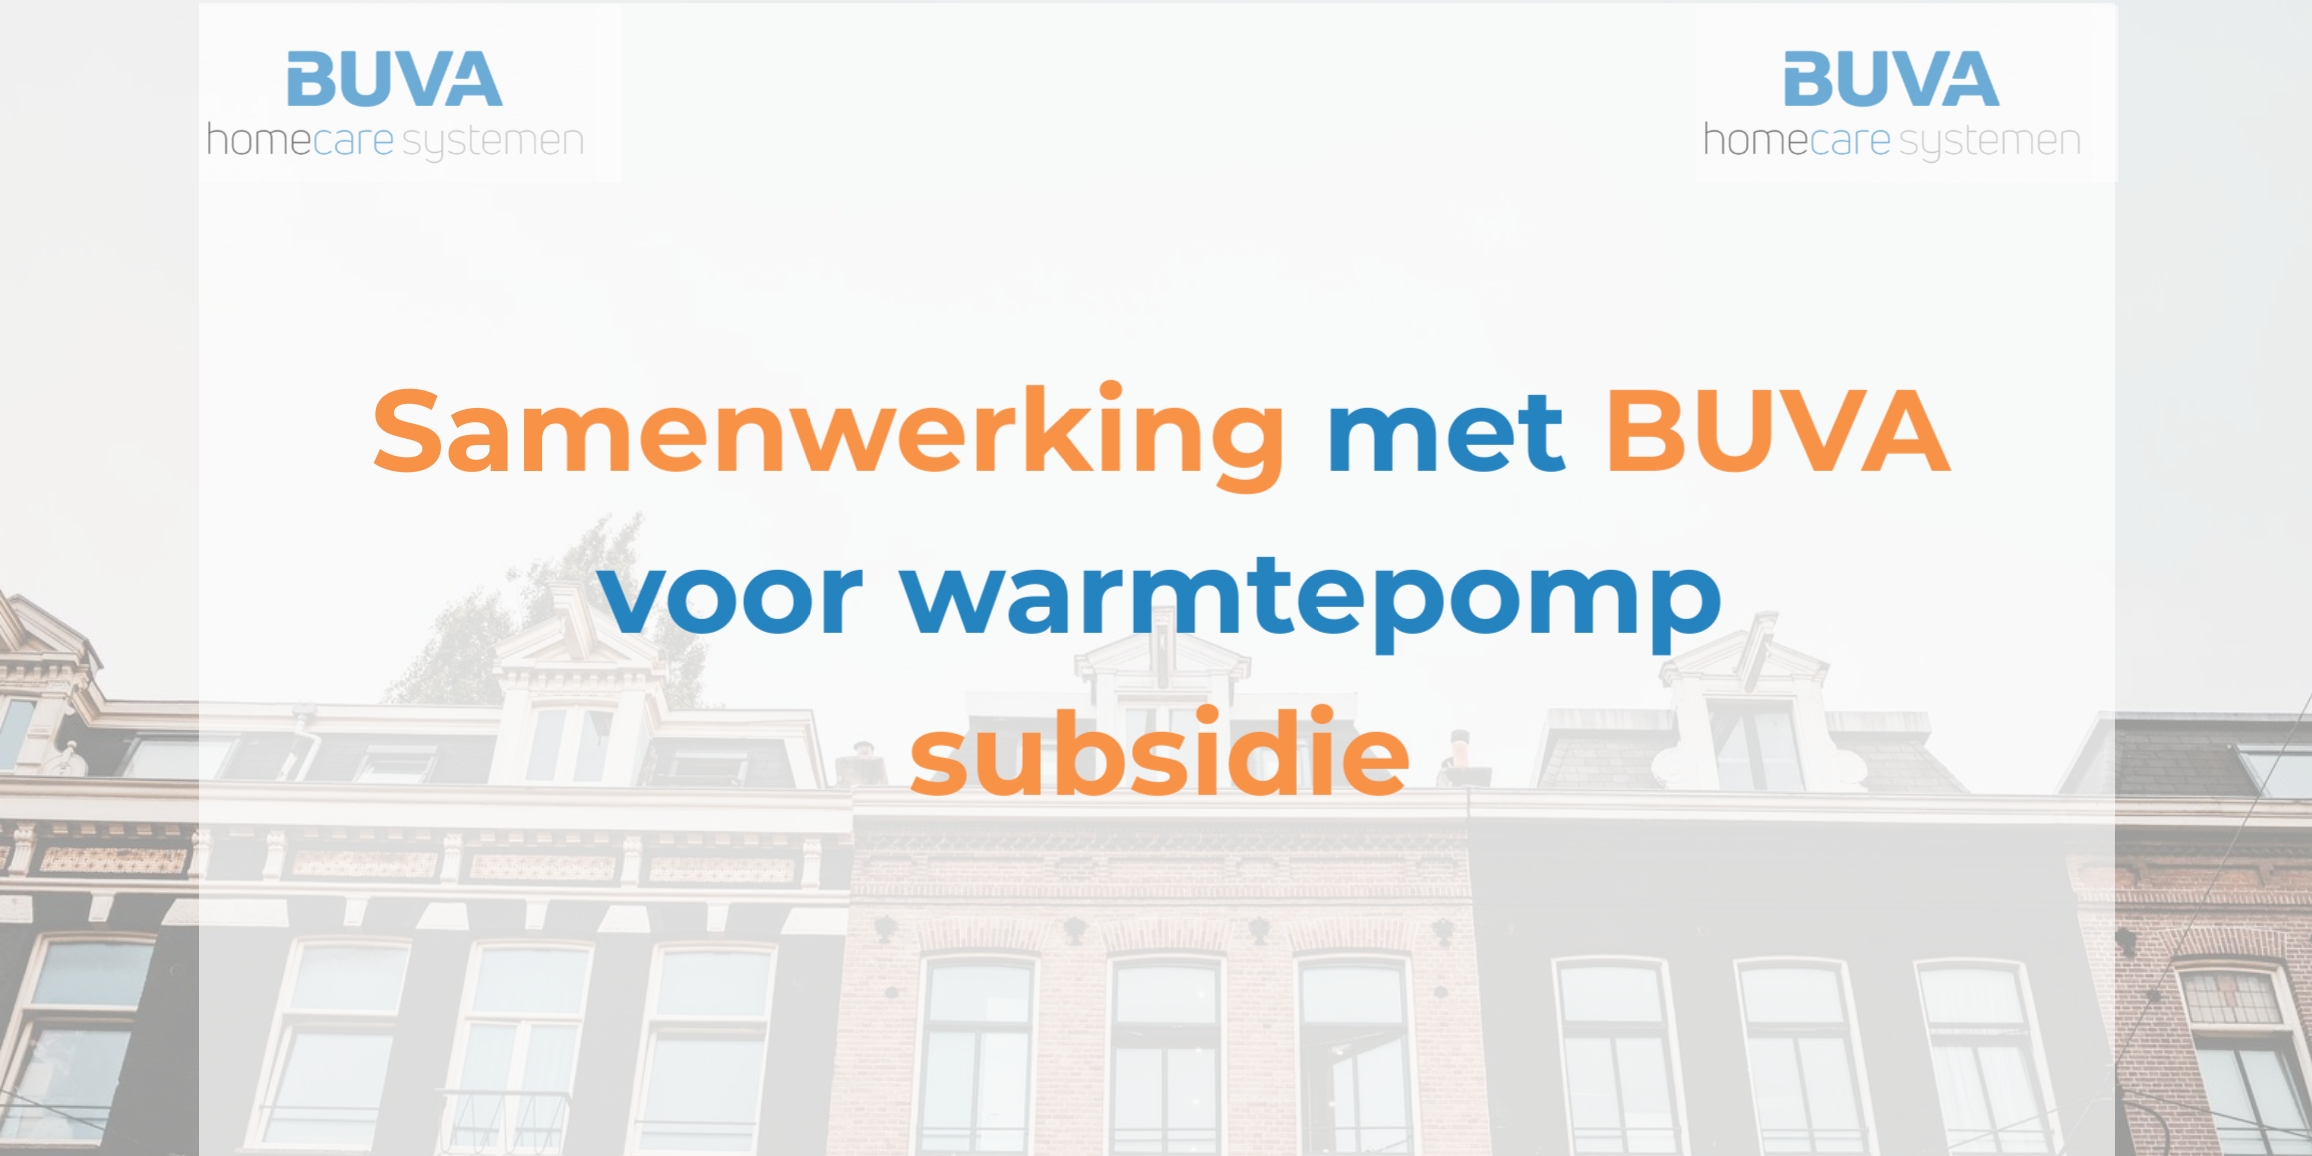 Samenwerking met BUVA voor ondersteuning warmtepompsubsidie